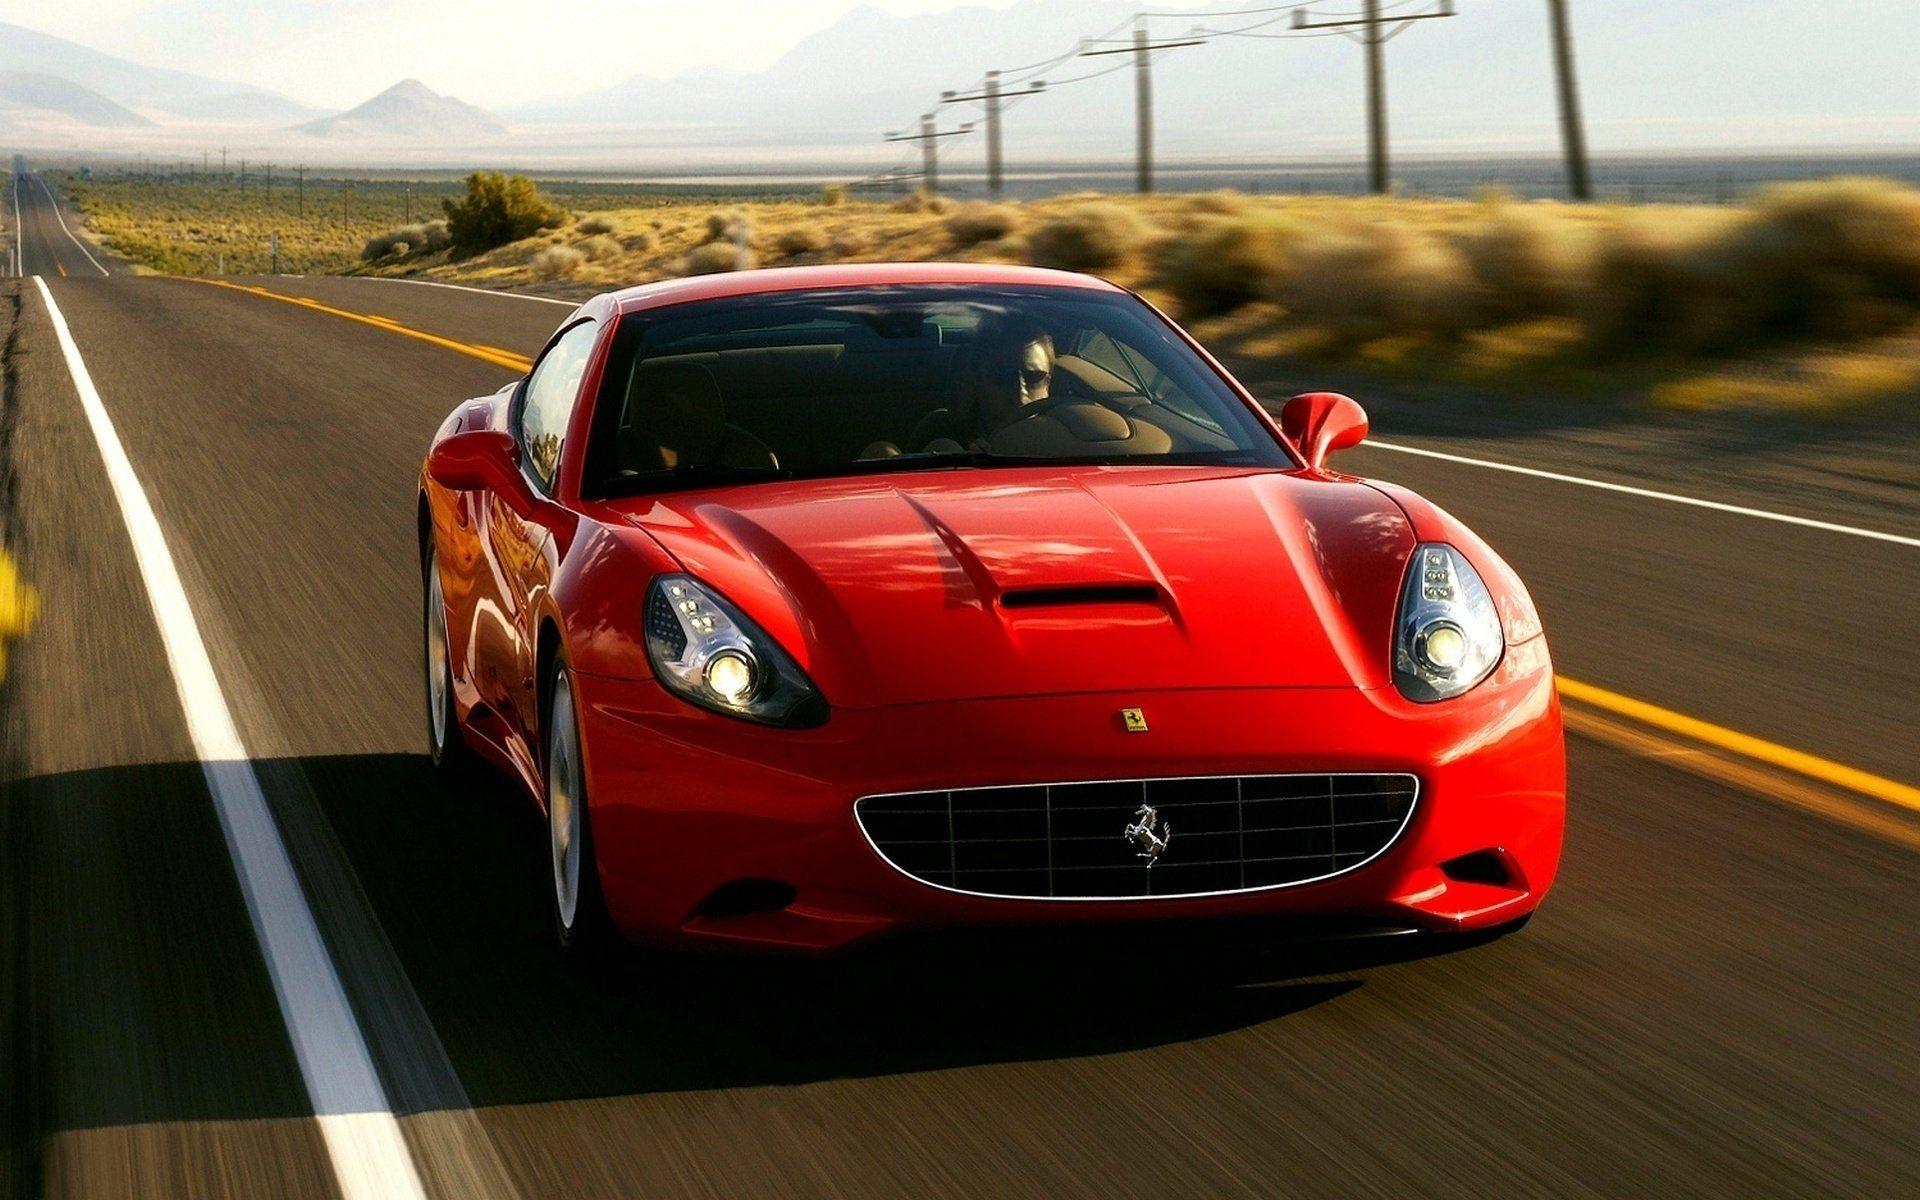 Ferrari California HD Wallpaper and Background Image